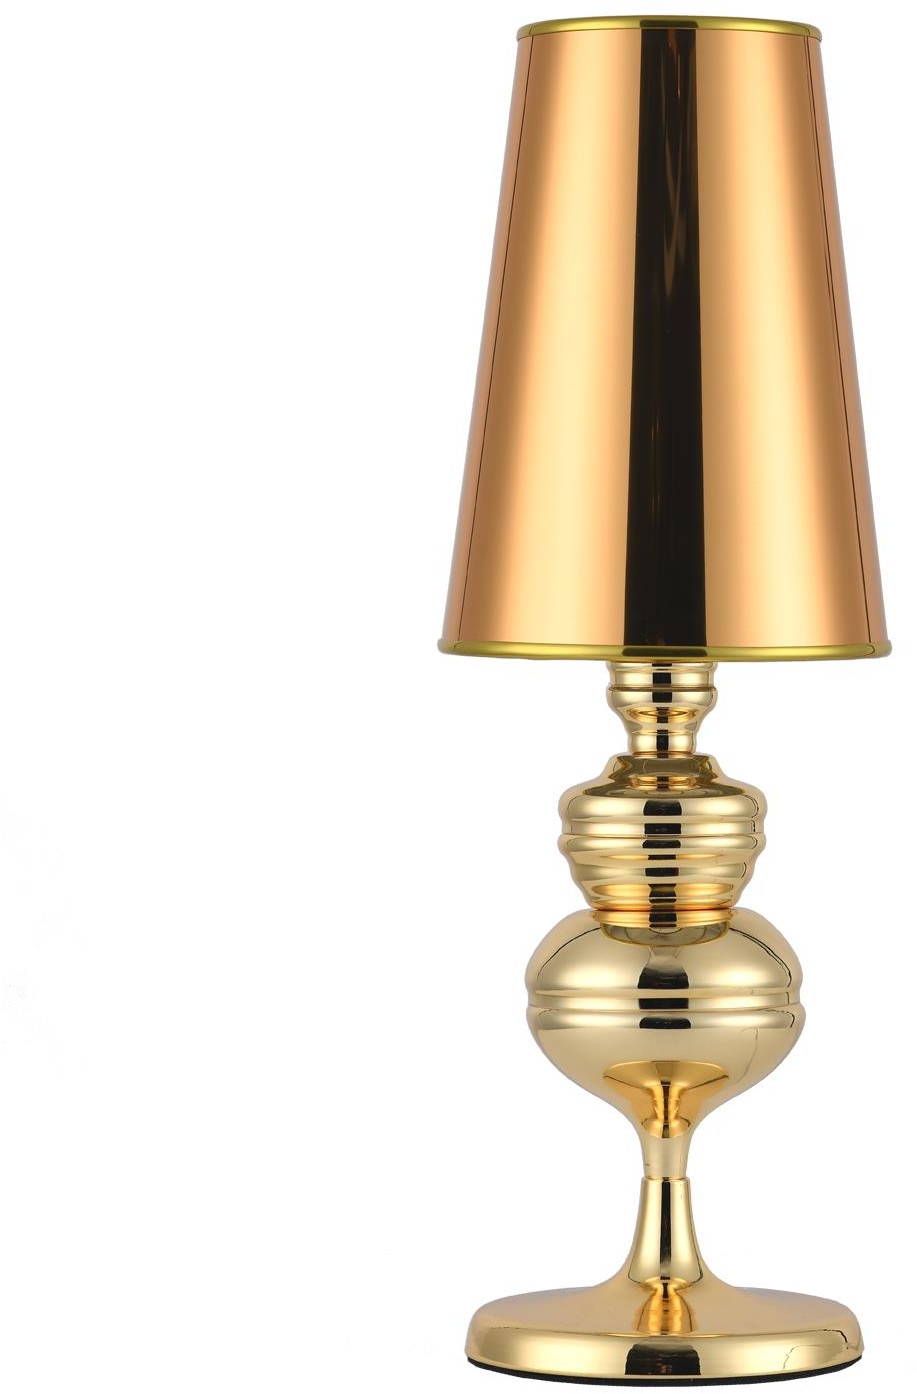 KKS Jadalniana lampa stołowa QUEEN MT-8046-18 abażurowa czarna złota